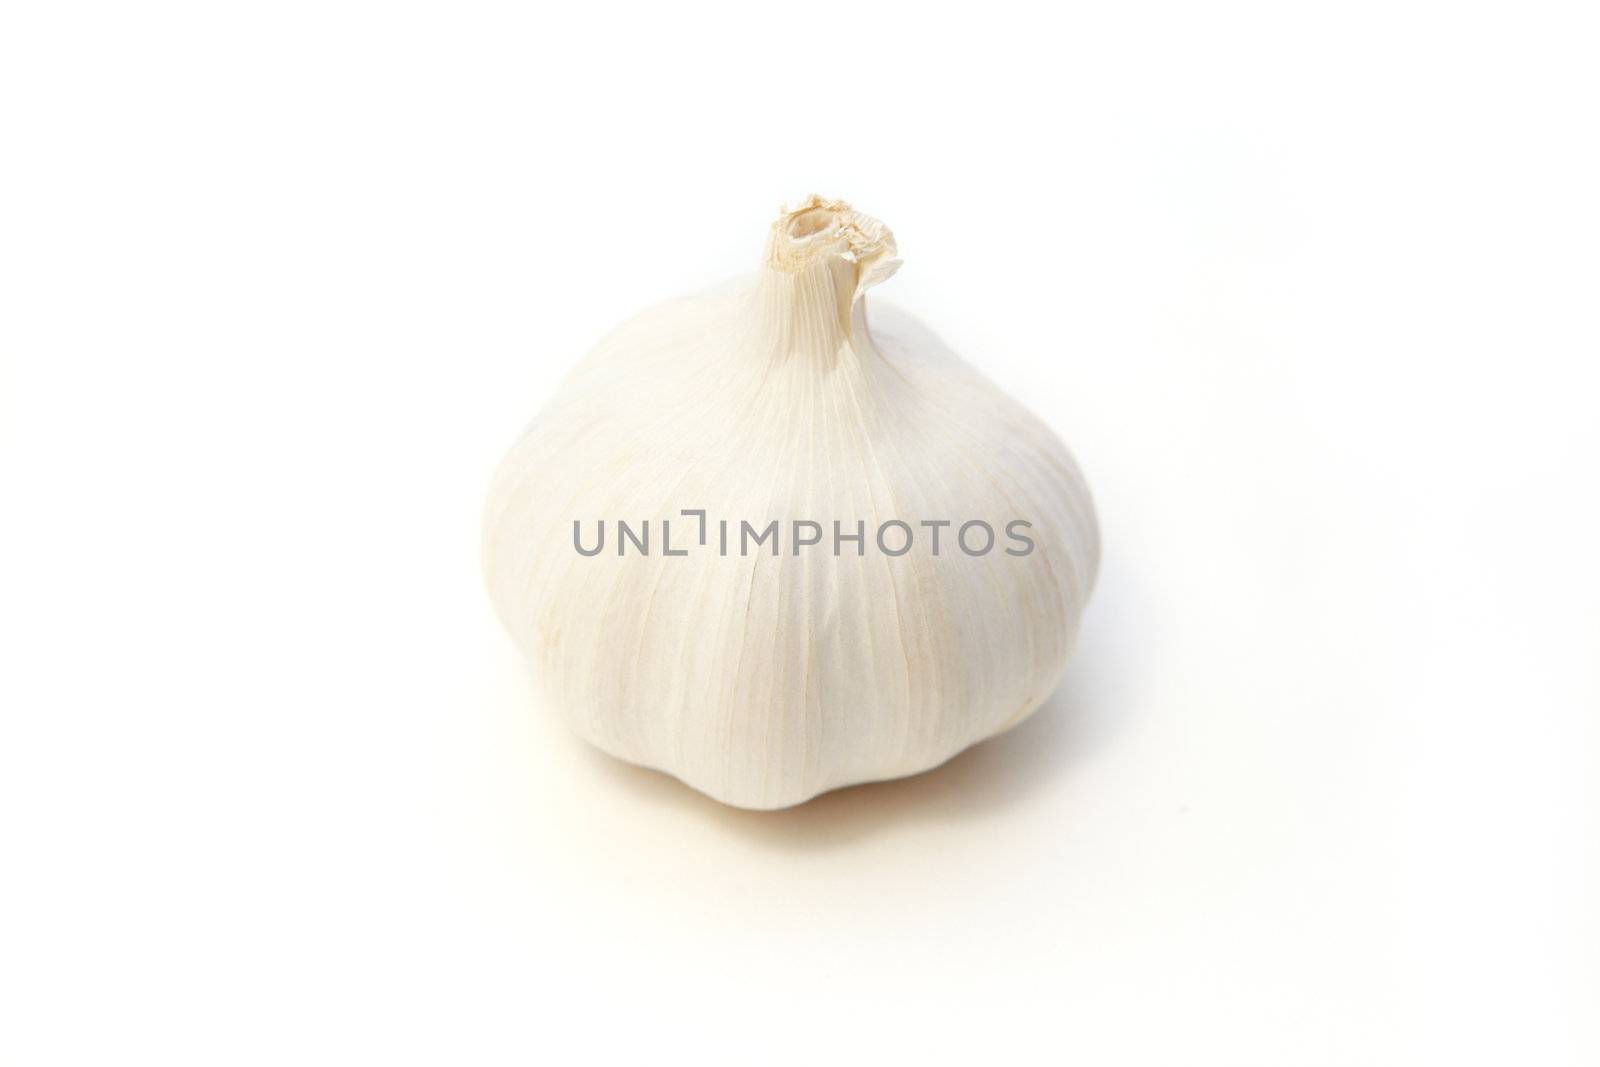 white garlic by catolla